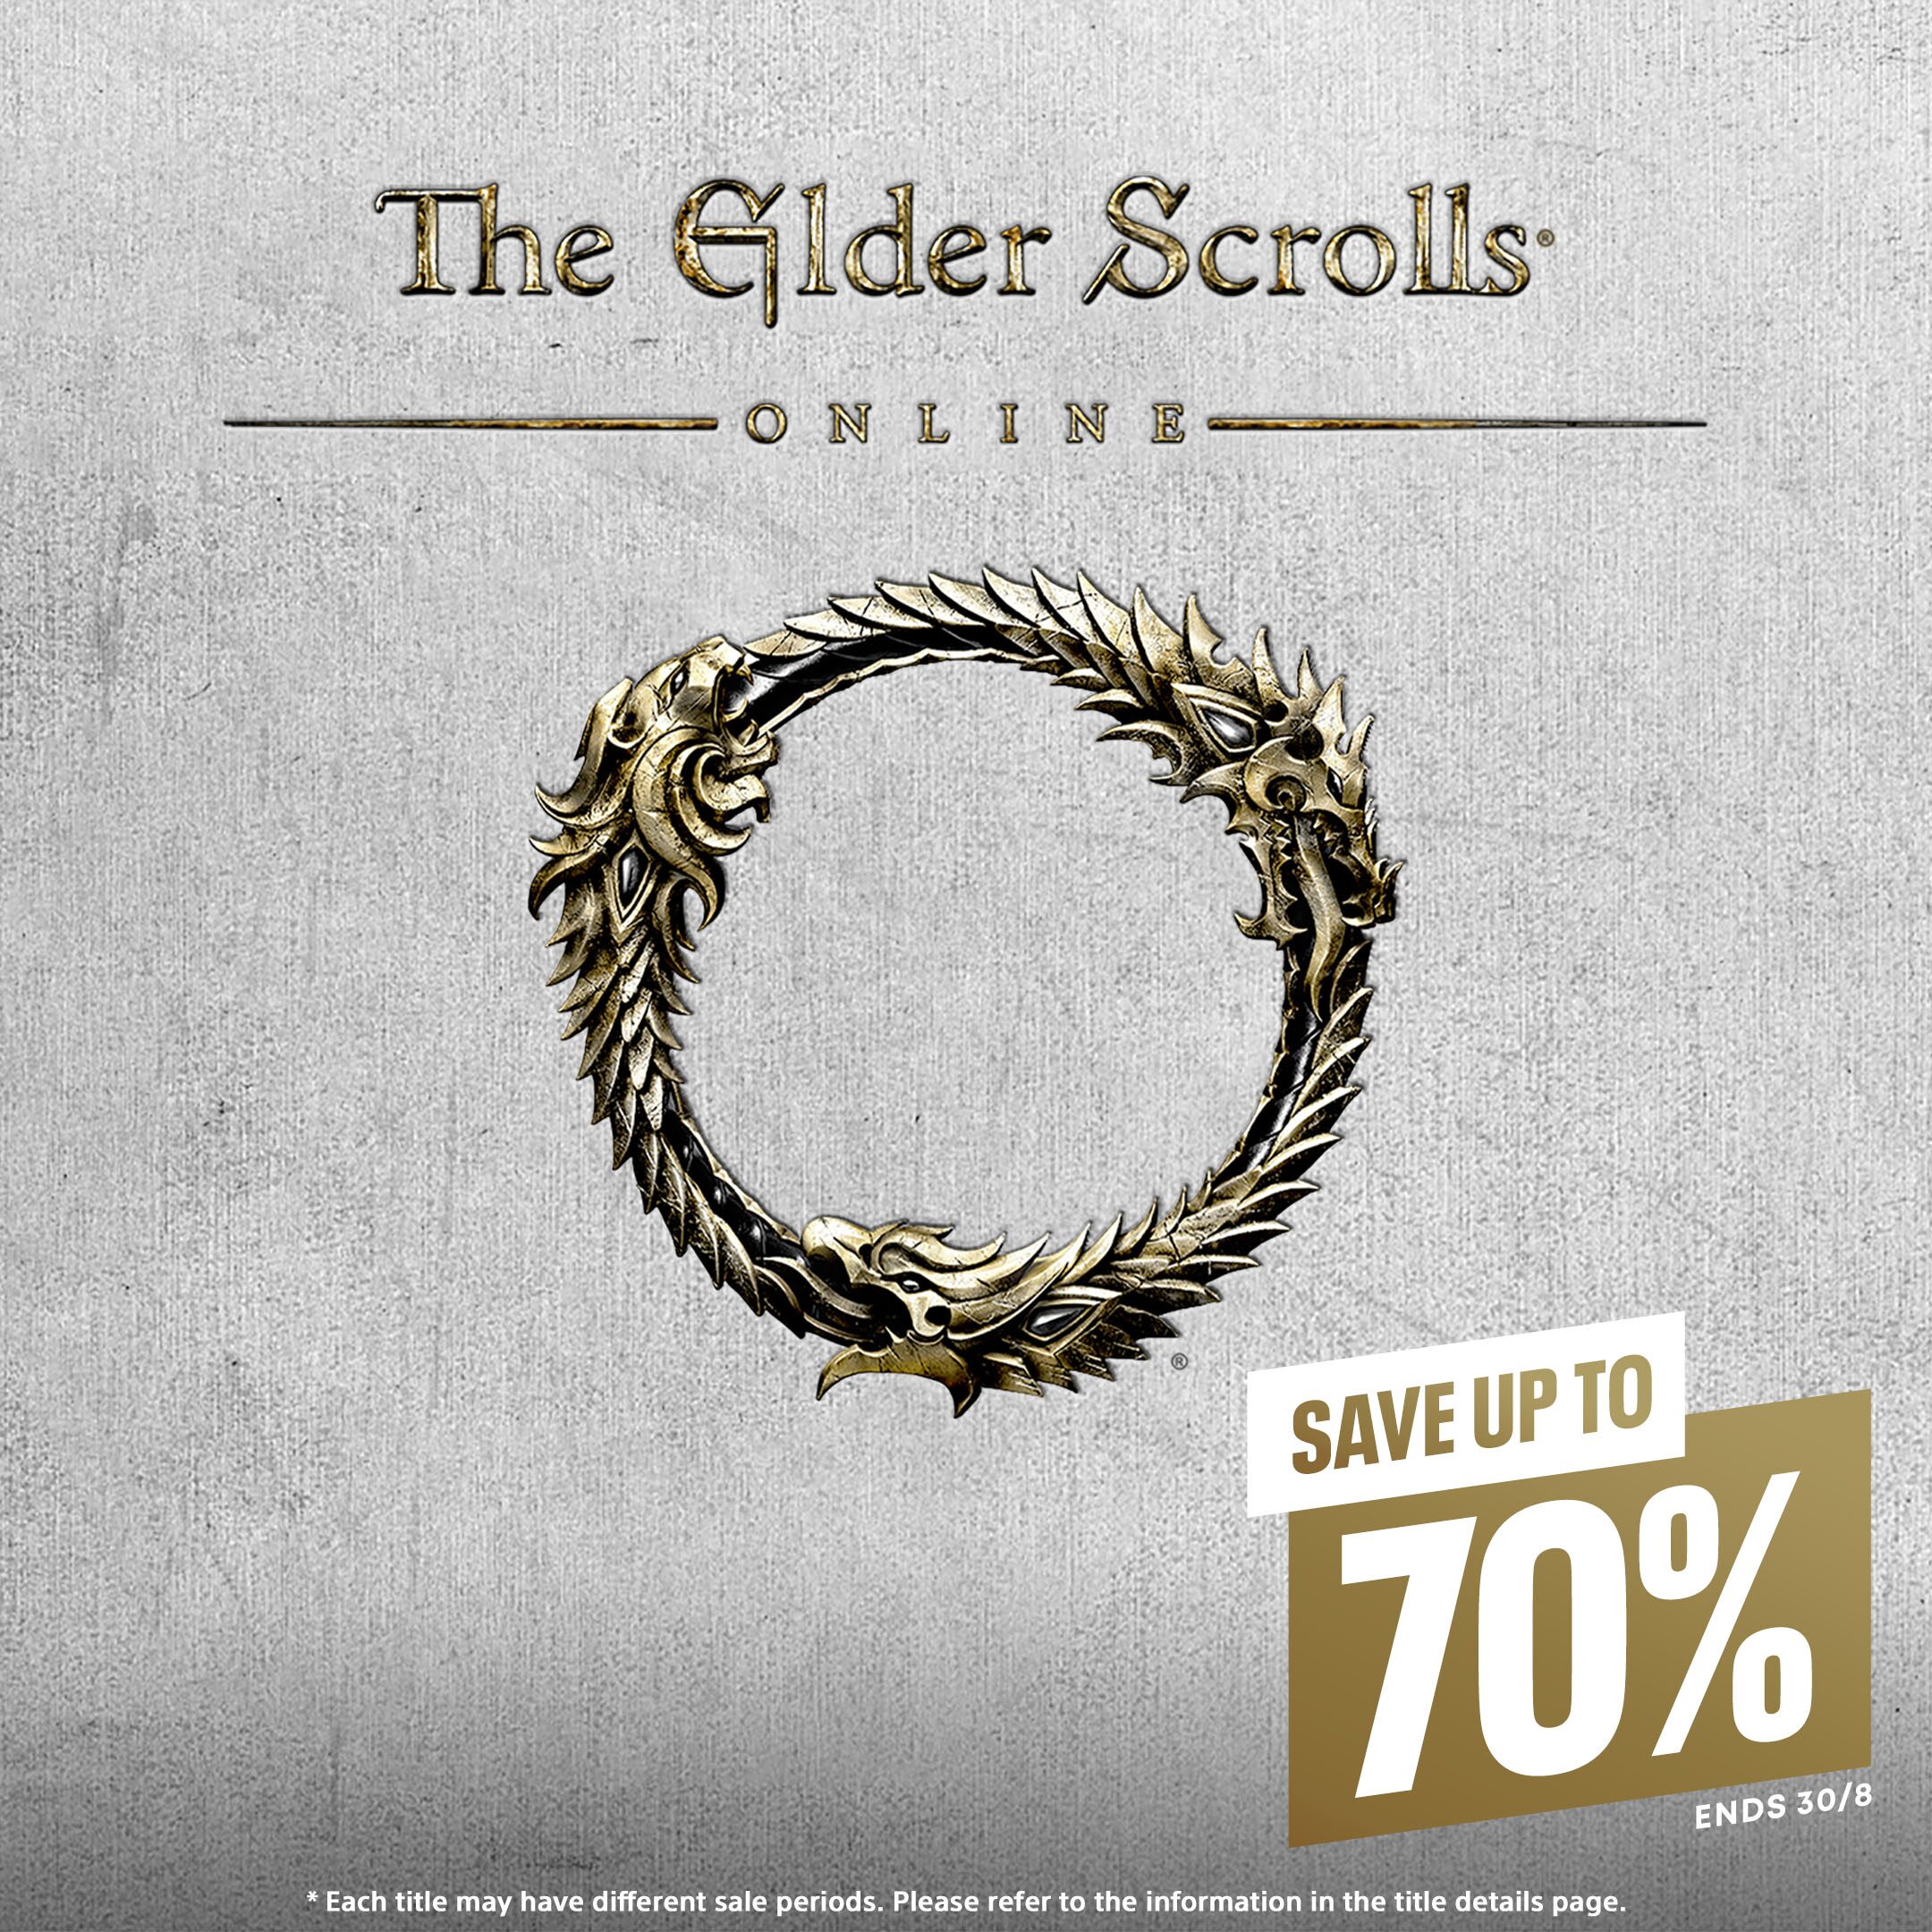 [PROMO] The Elder Scrolls Online